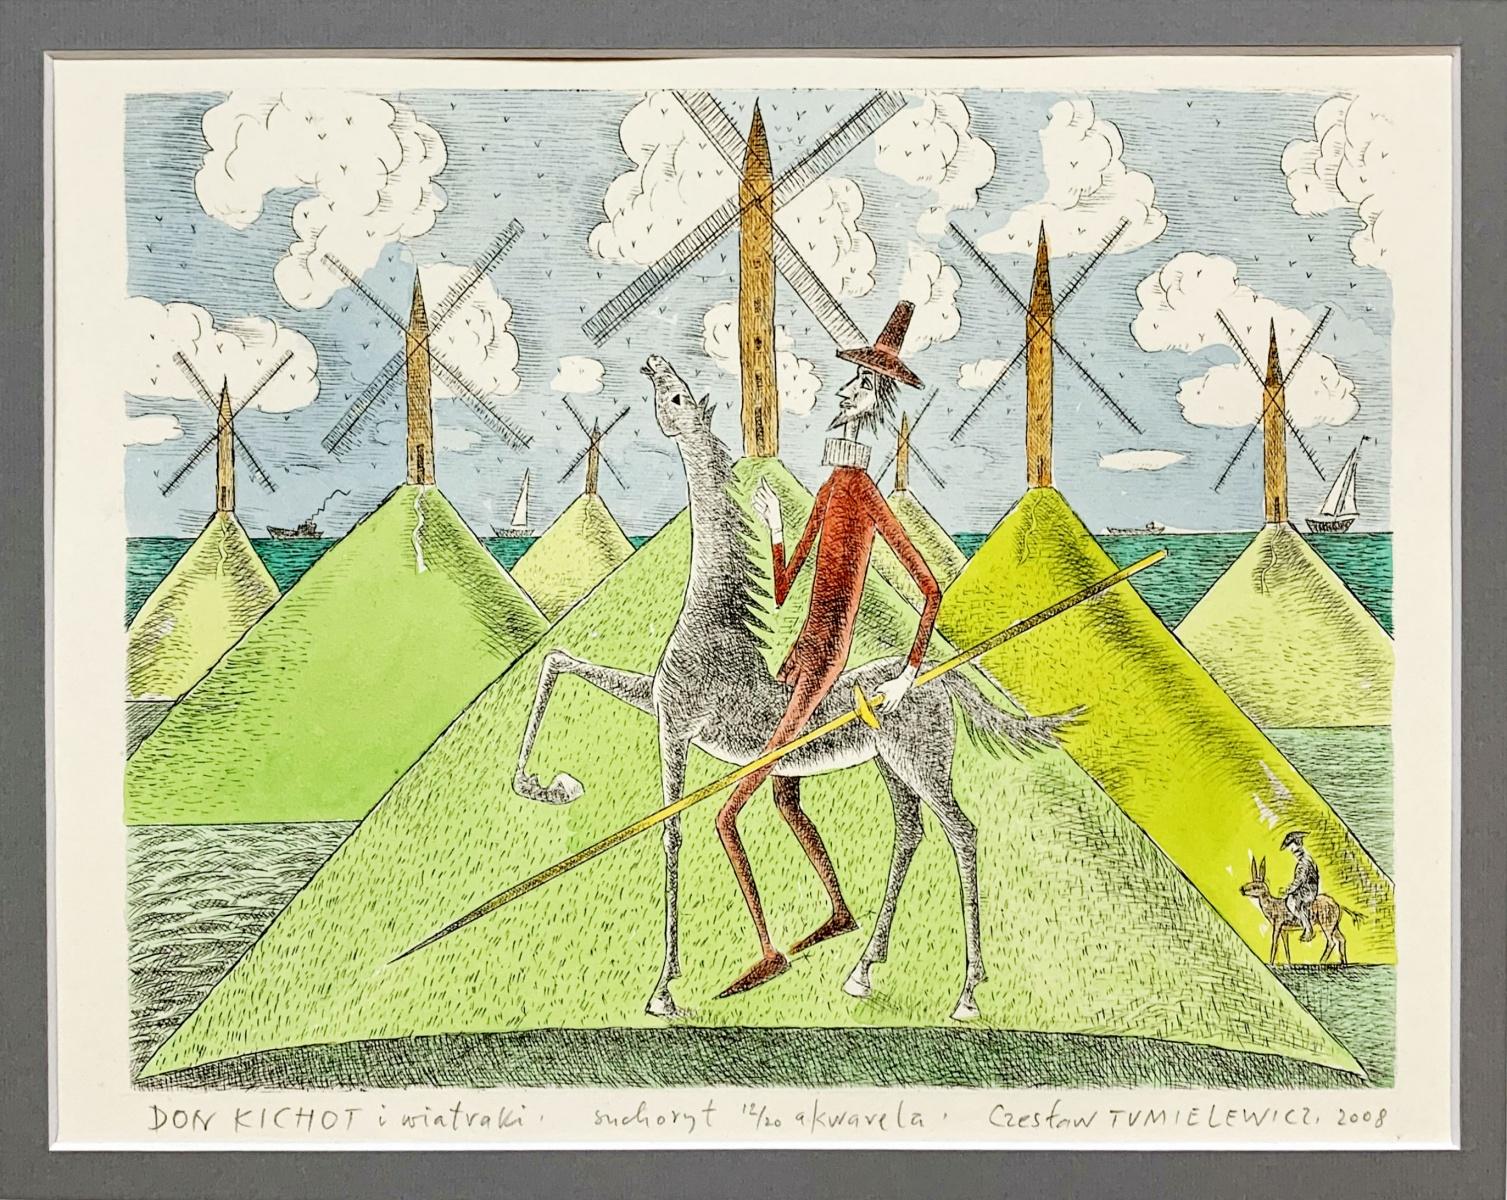 Don Kichot & a windmill - Figurative drypoint print & watercolor, Colorful - Print by Czeslaw Tumielewicz